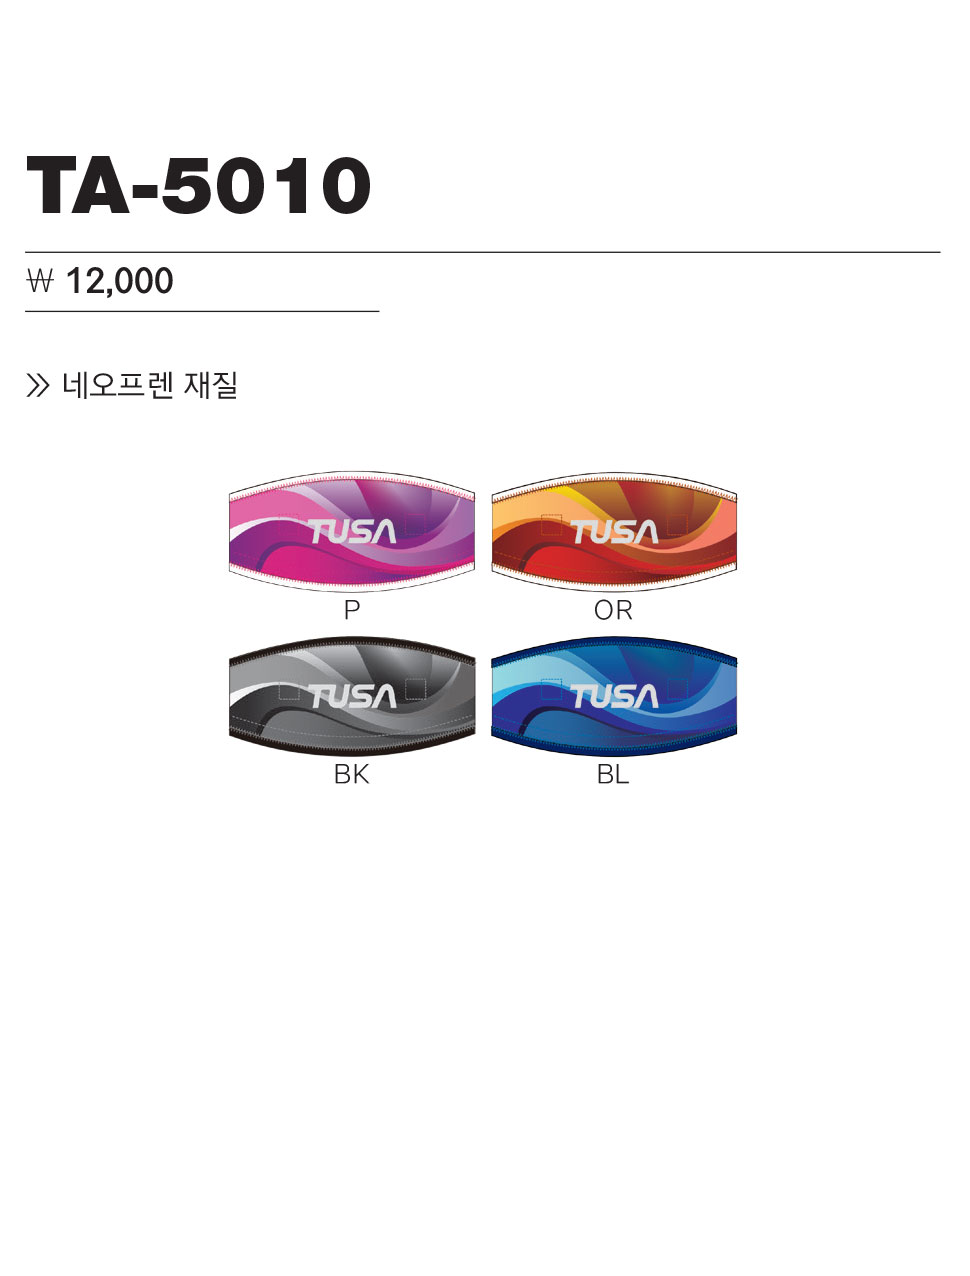 TA-5010_detail.jpg